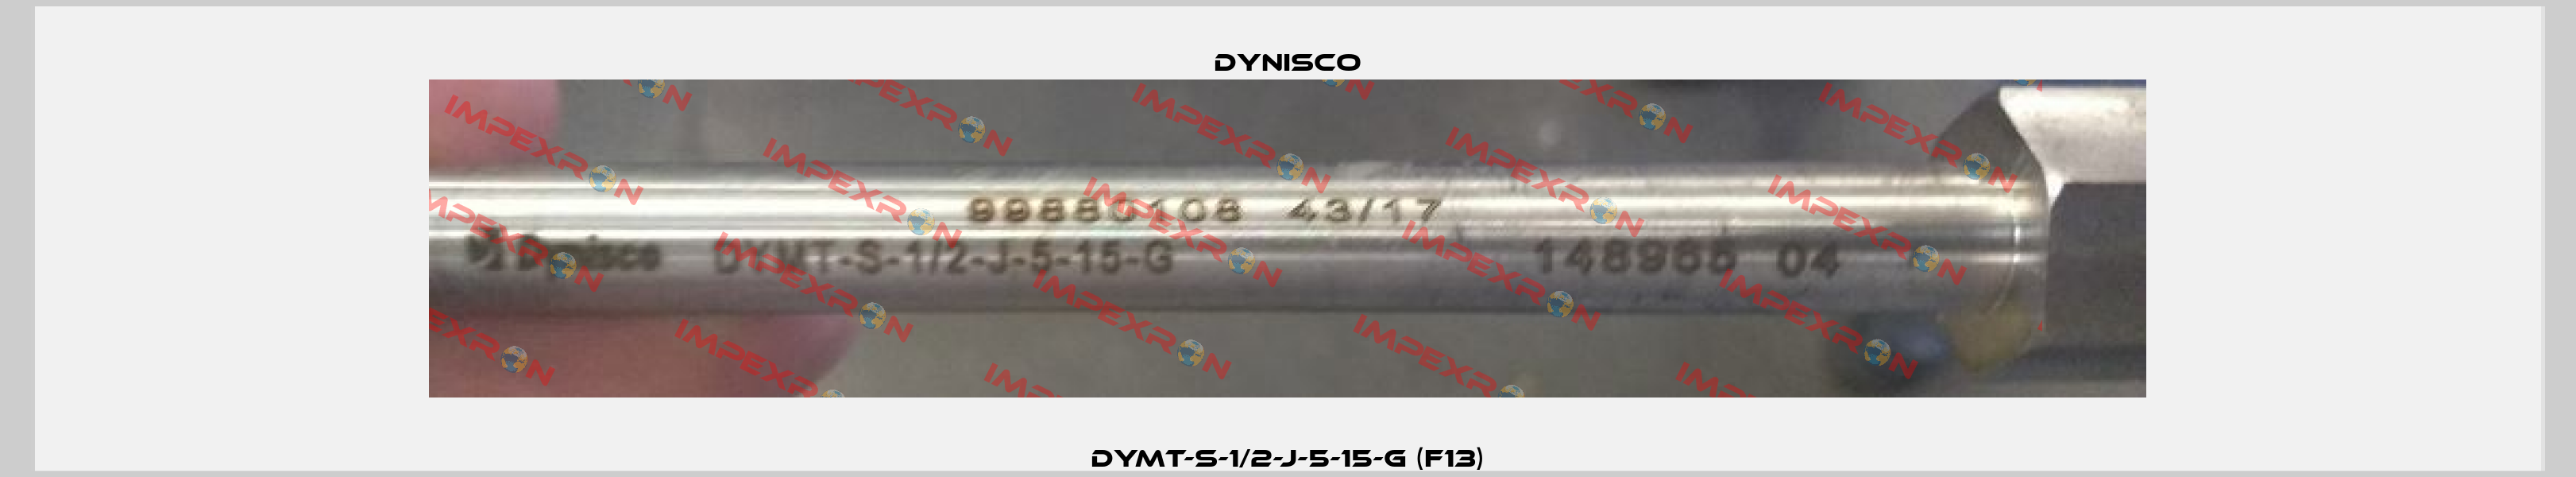 DYMT-S-1/2-J-5-15-G (F13) Dynisco